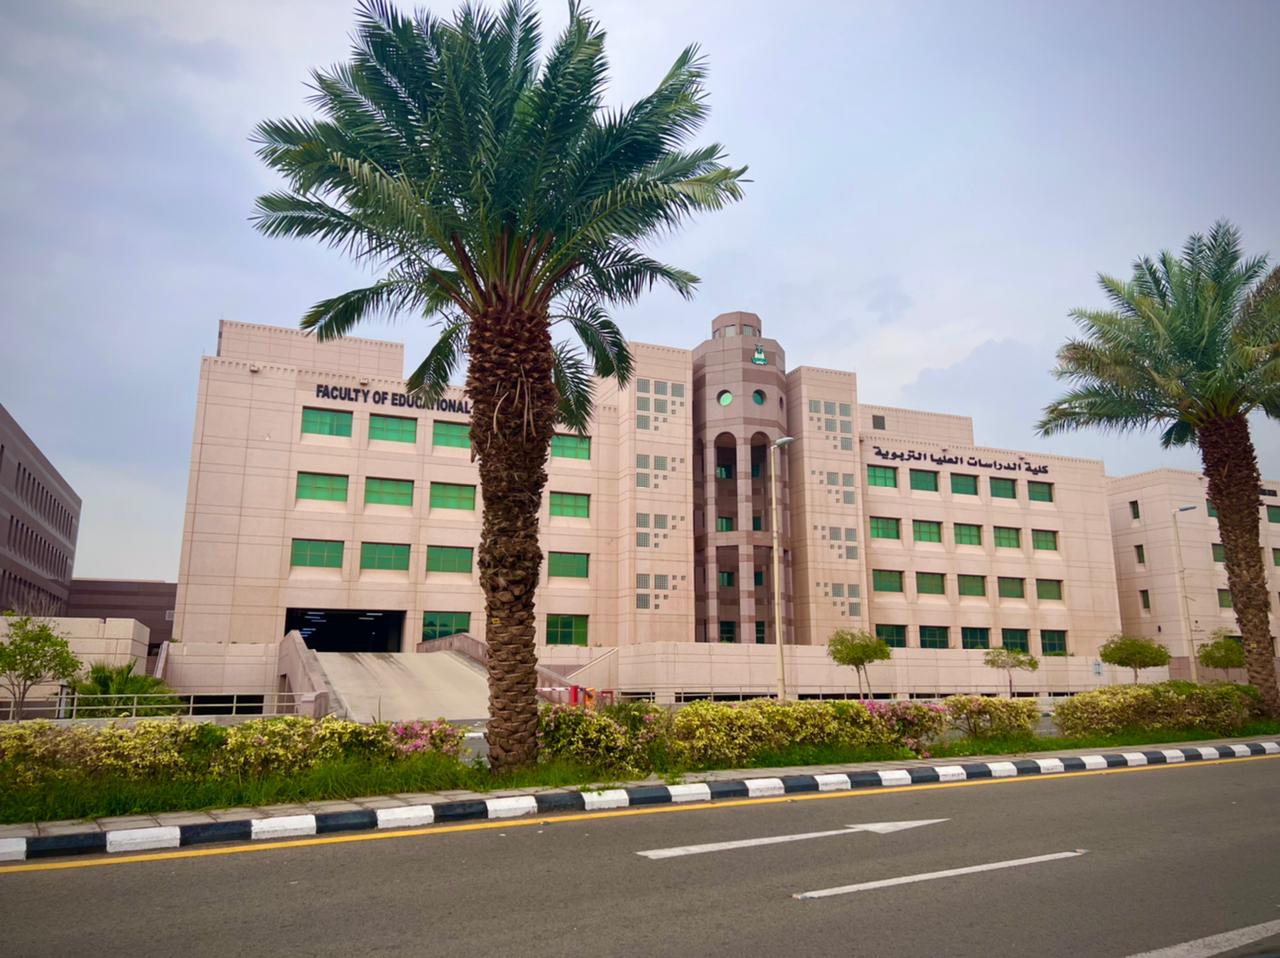 Faculty of Educational Graduate Studies